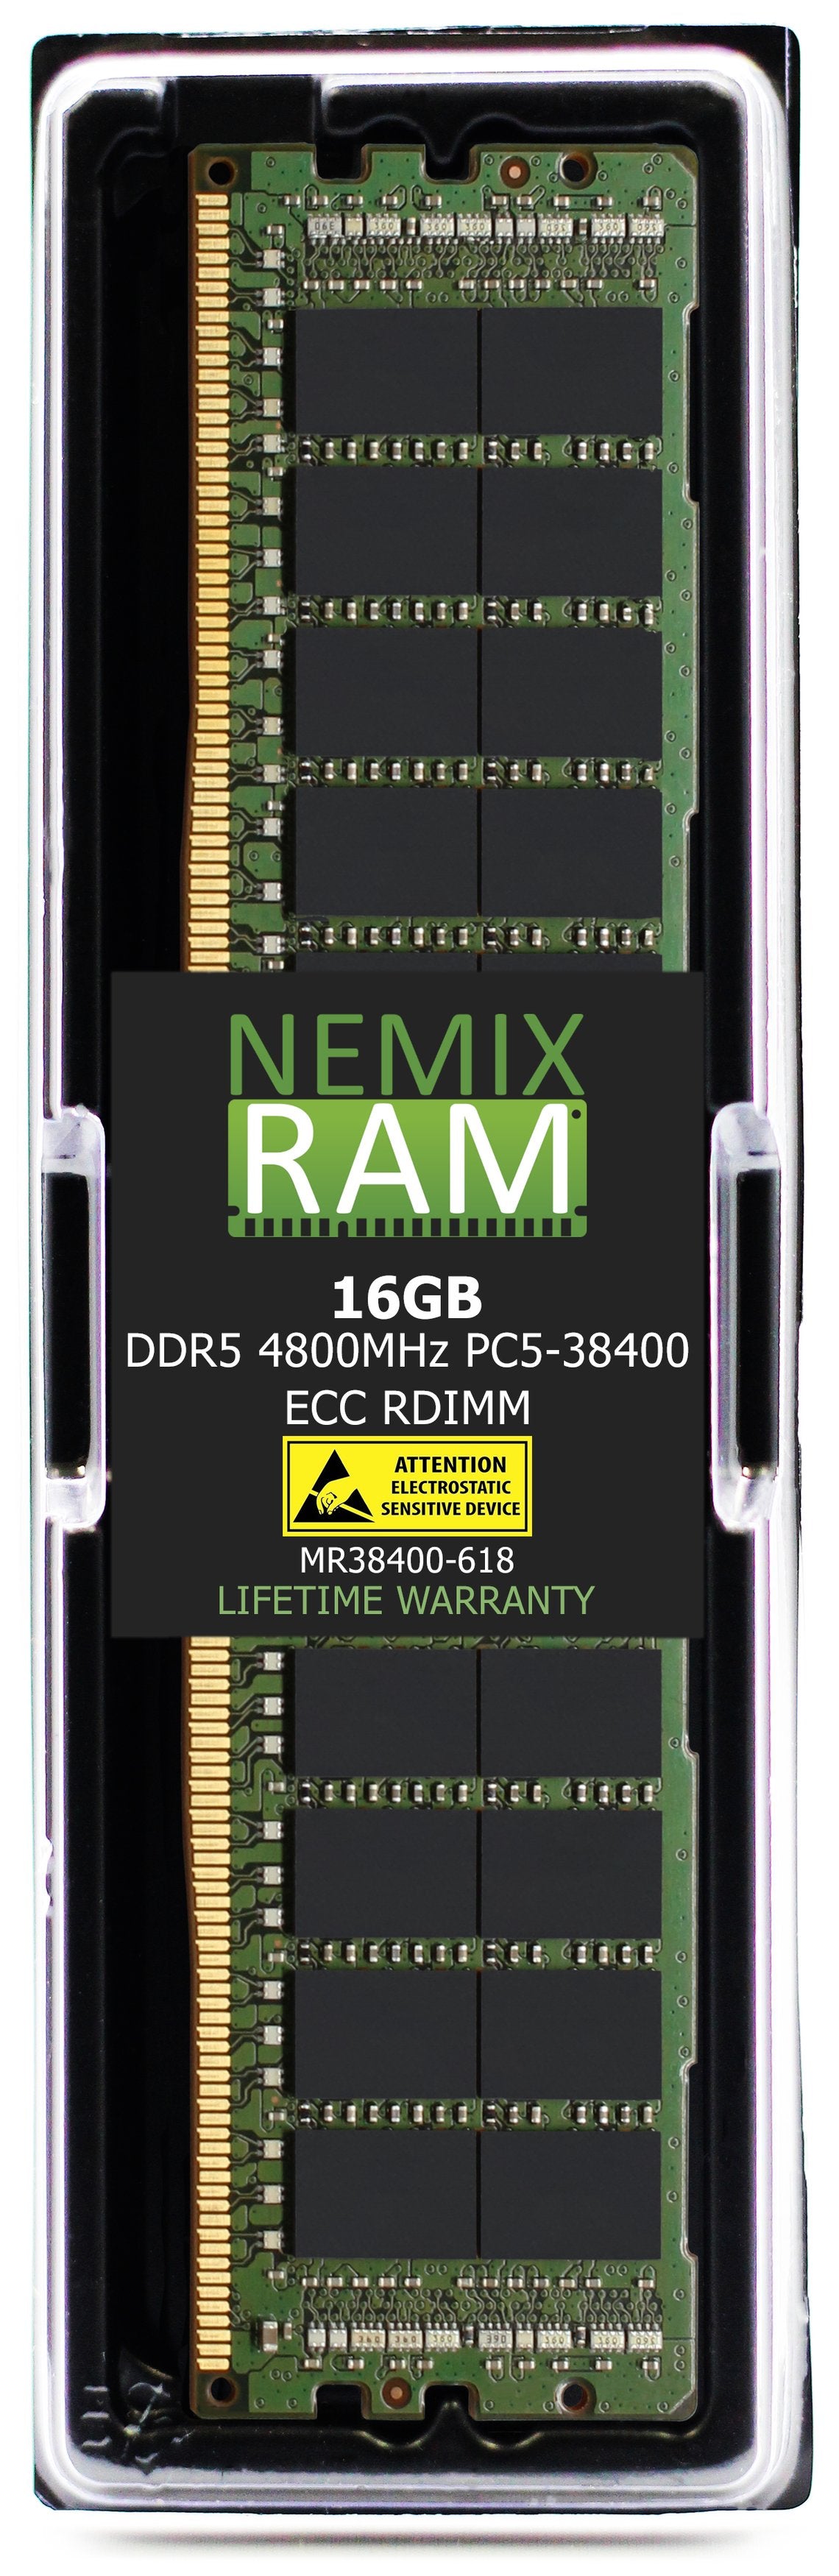 DELL PowerEdge R7625 Rack Server Memory Upgrade